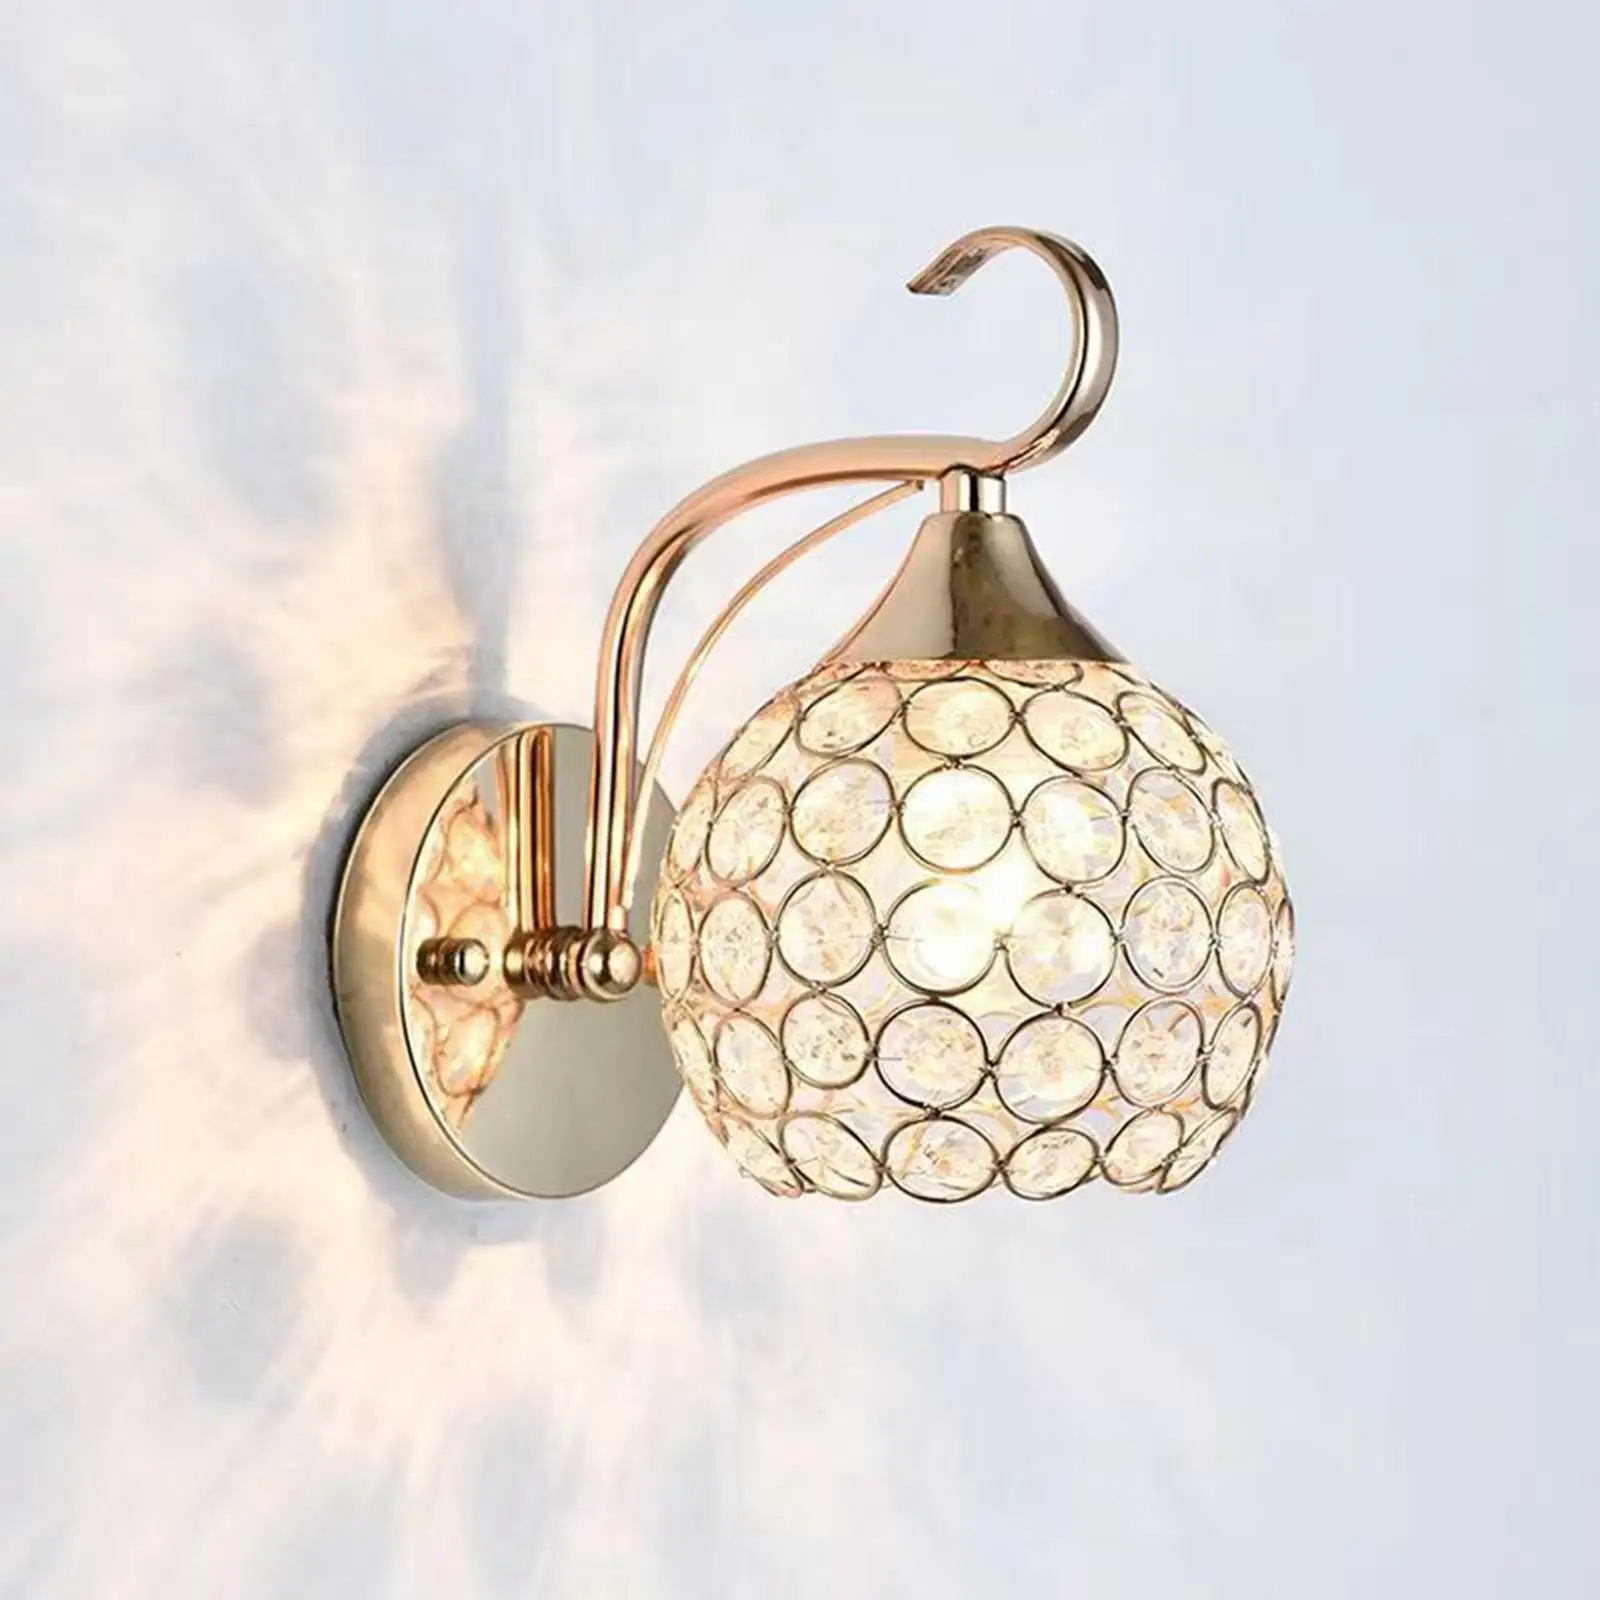 Vintage Style Wall Lamp Ornament Bedside Lighting Fixture Metal E27 Socket